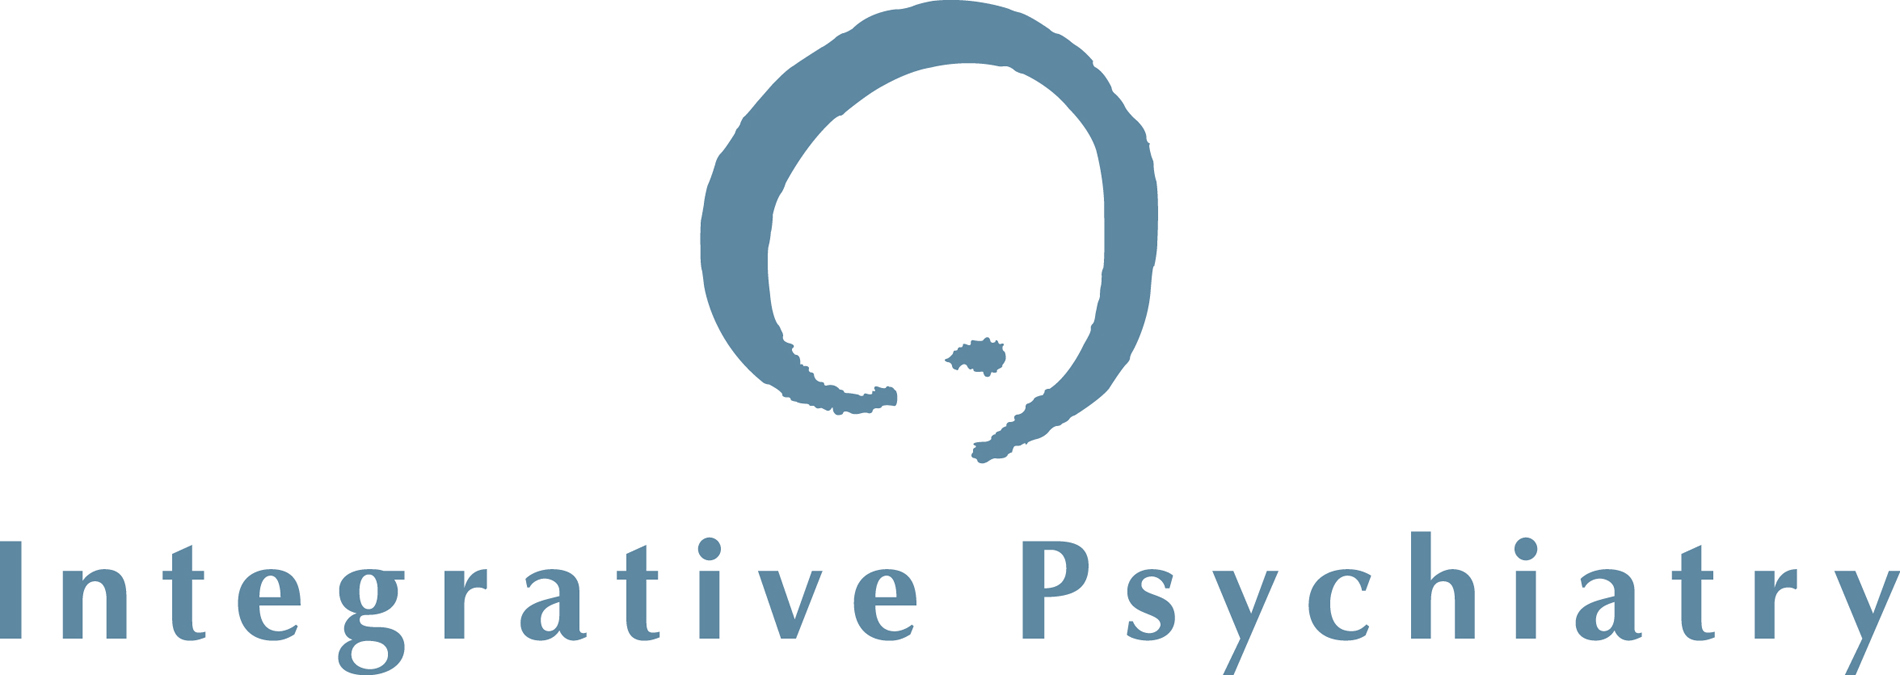 Integrative Psychiatry logo